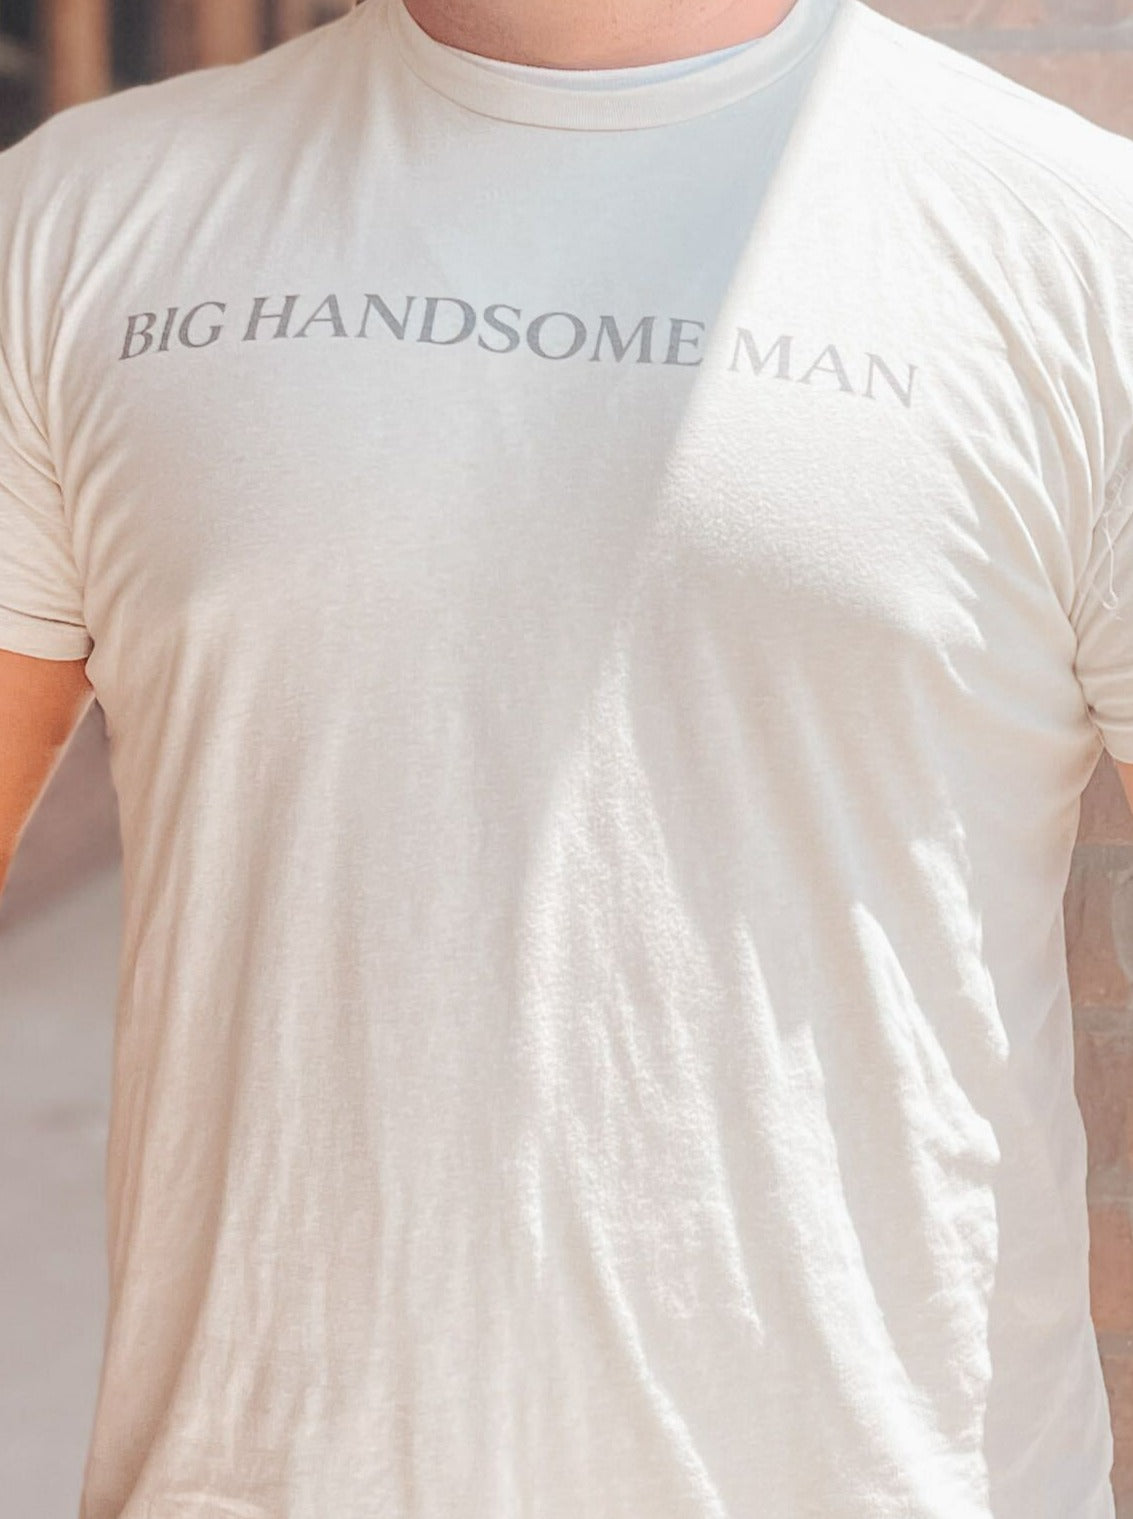 Bubwear Big Handsome Man Graphic Tee-210 - TOPS - MENS TEES-BUBWEAR-[option4]-[option5]-[option6]-Leather & Lace Boutique Shop